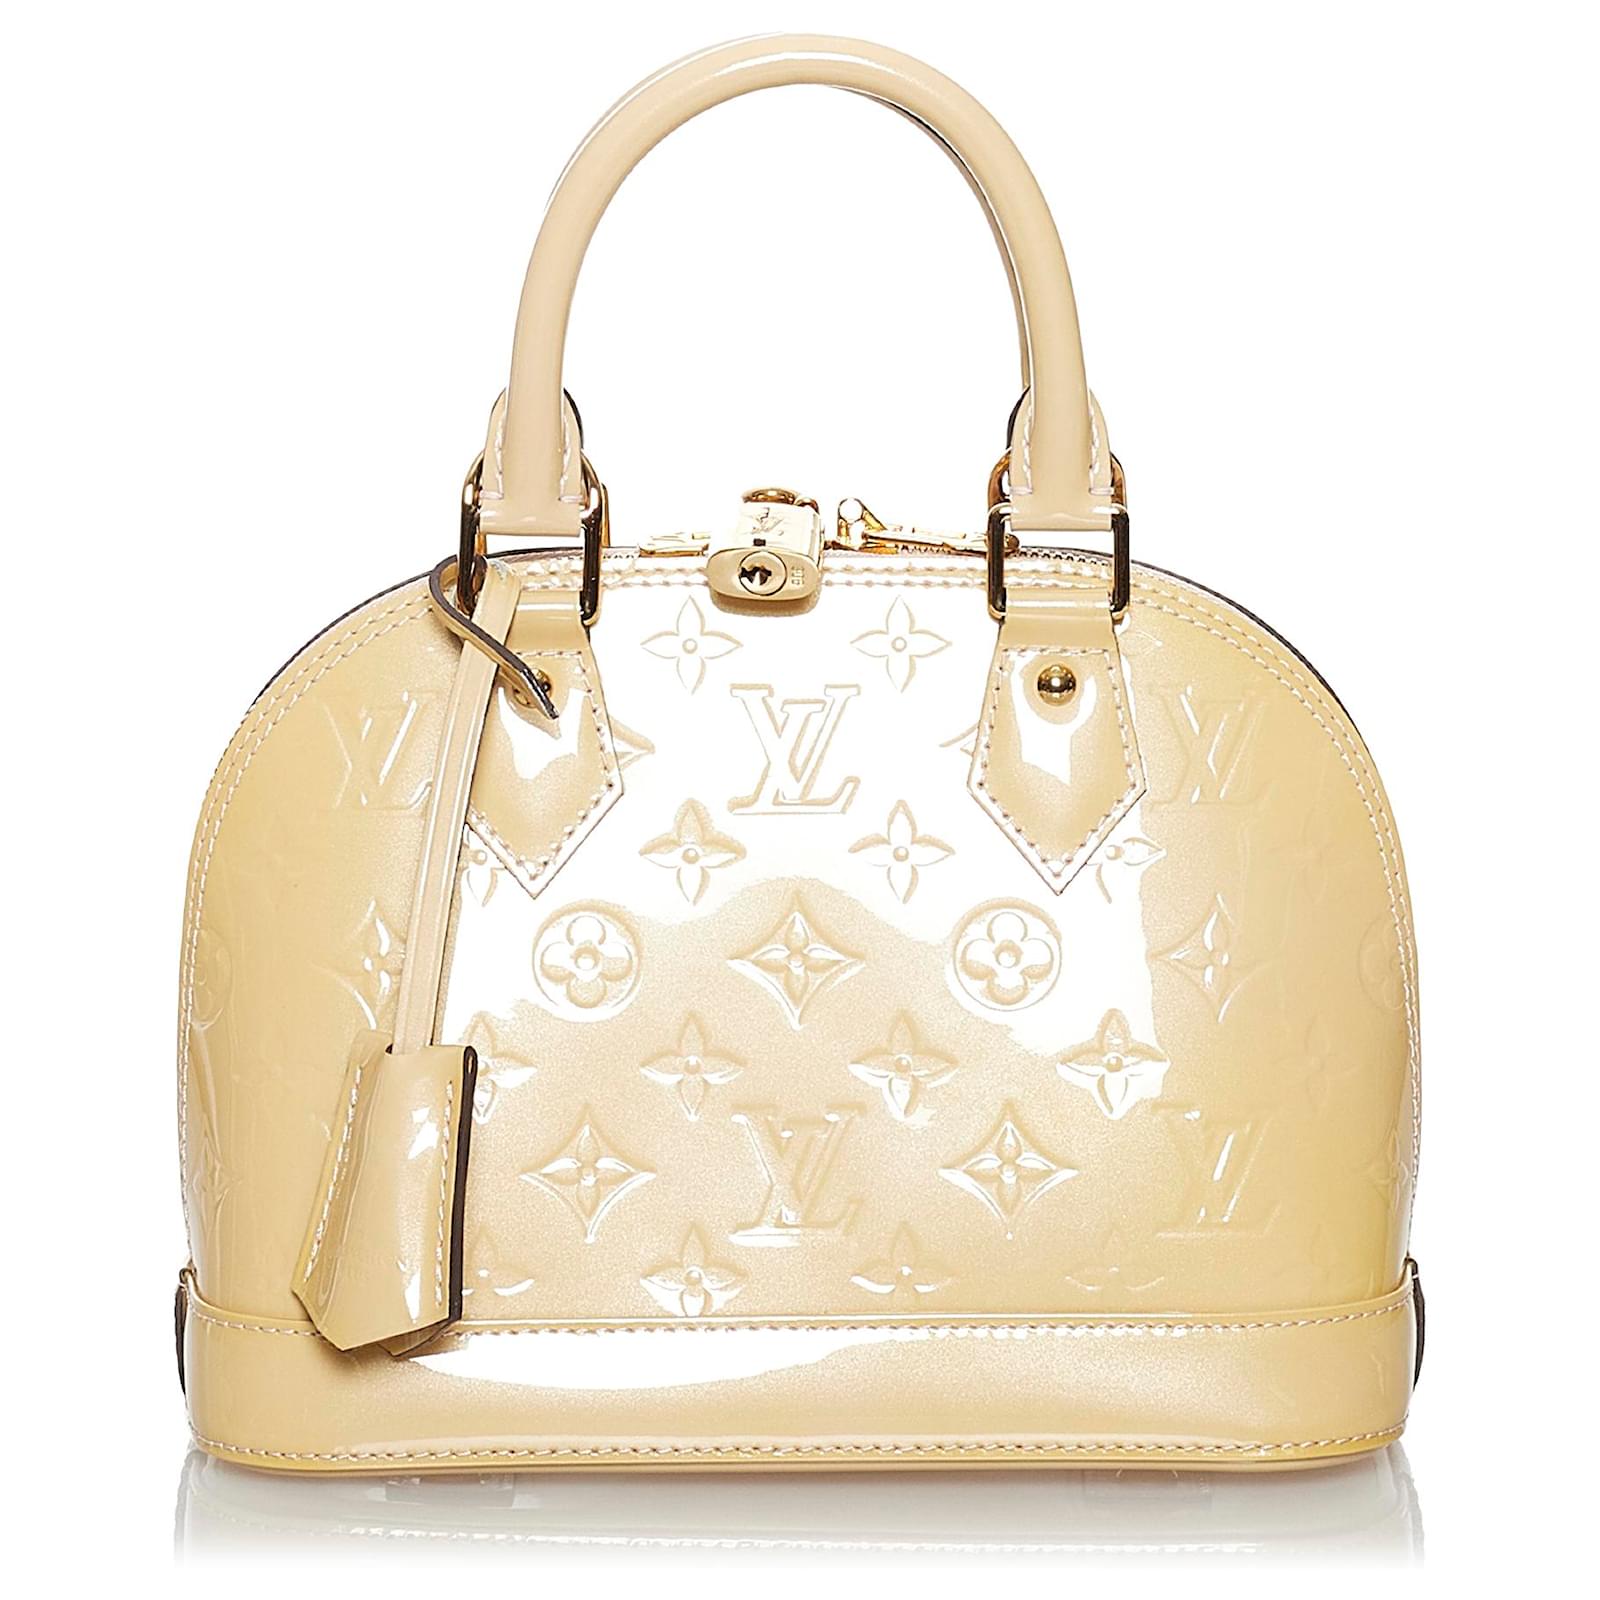 Louis Vuitton Vernis Alma handbag color beige Ladies branded